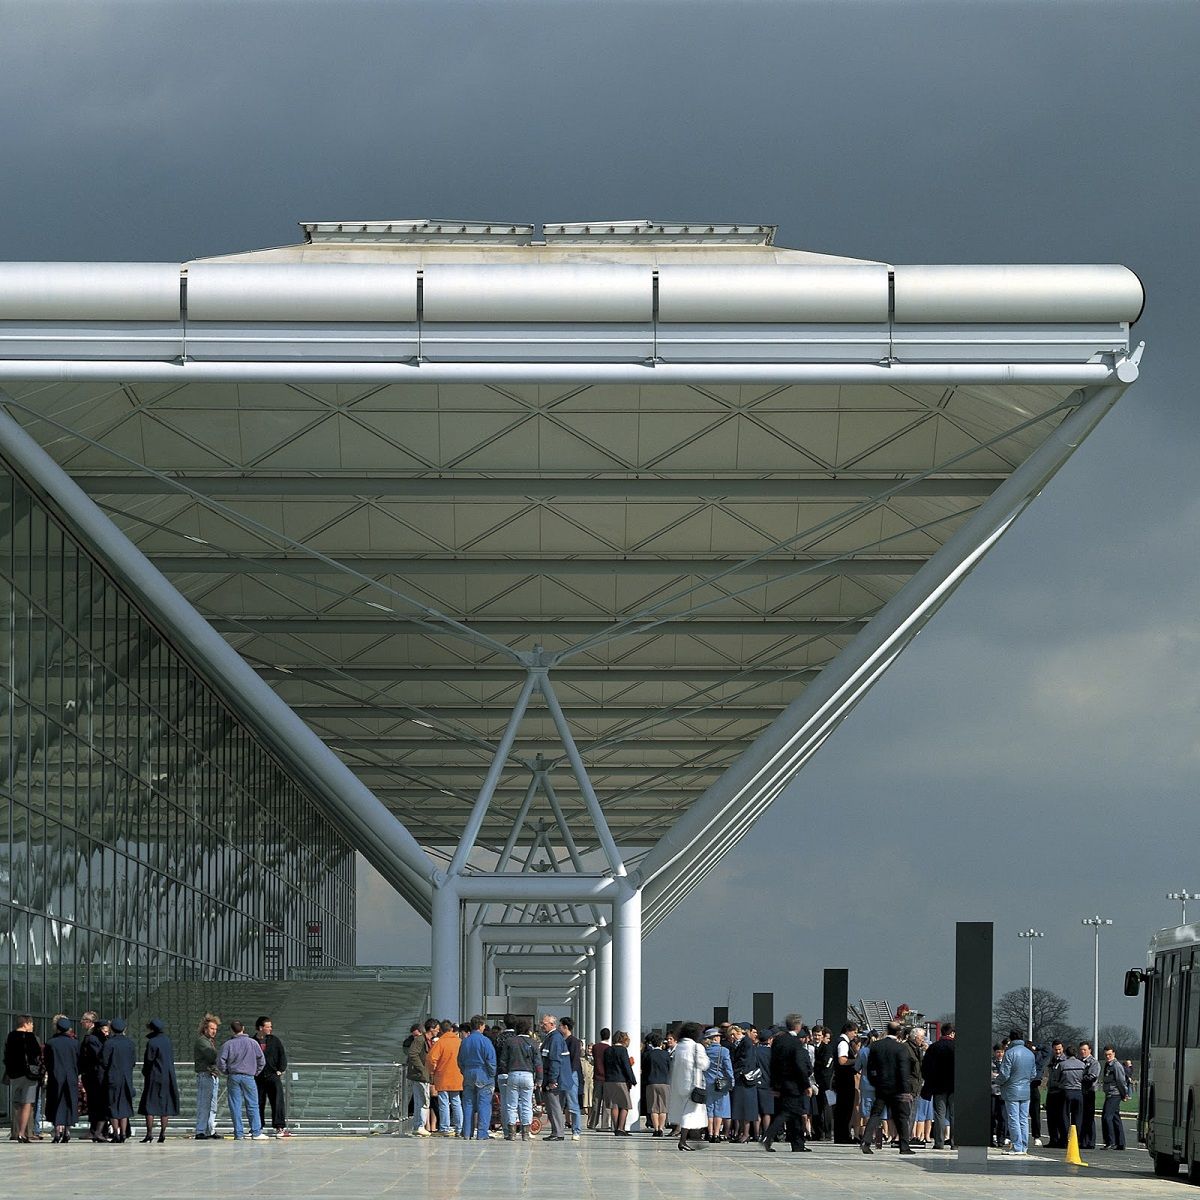 stansted airport foster partners high tech architecture dezeen ken kirkwood sq